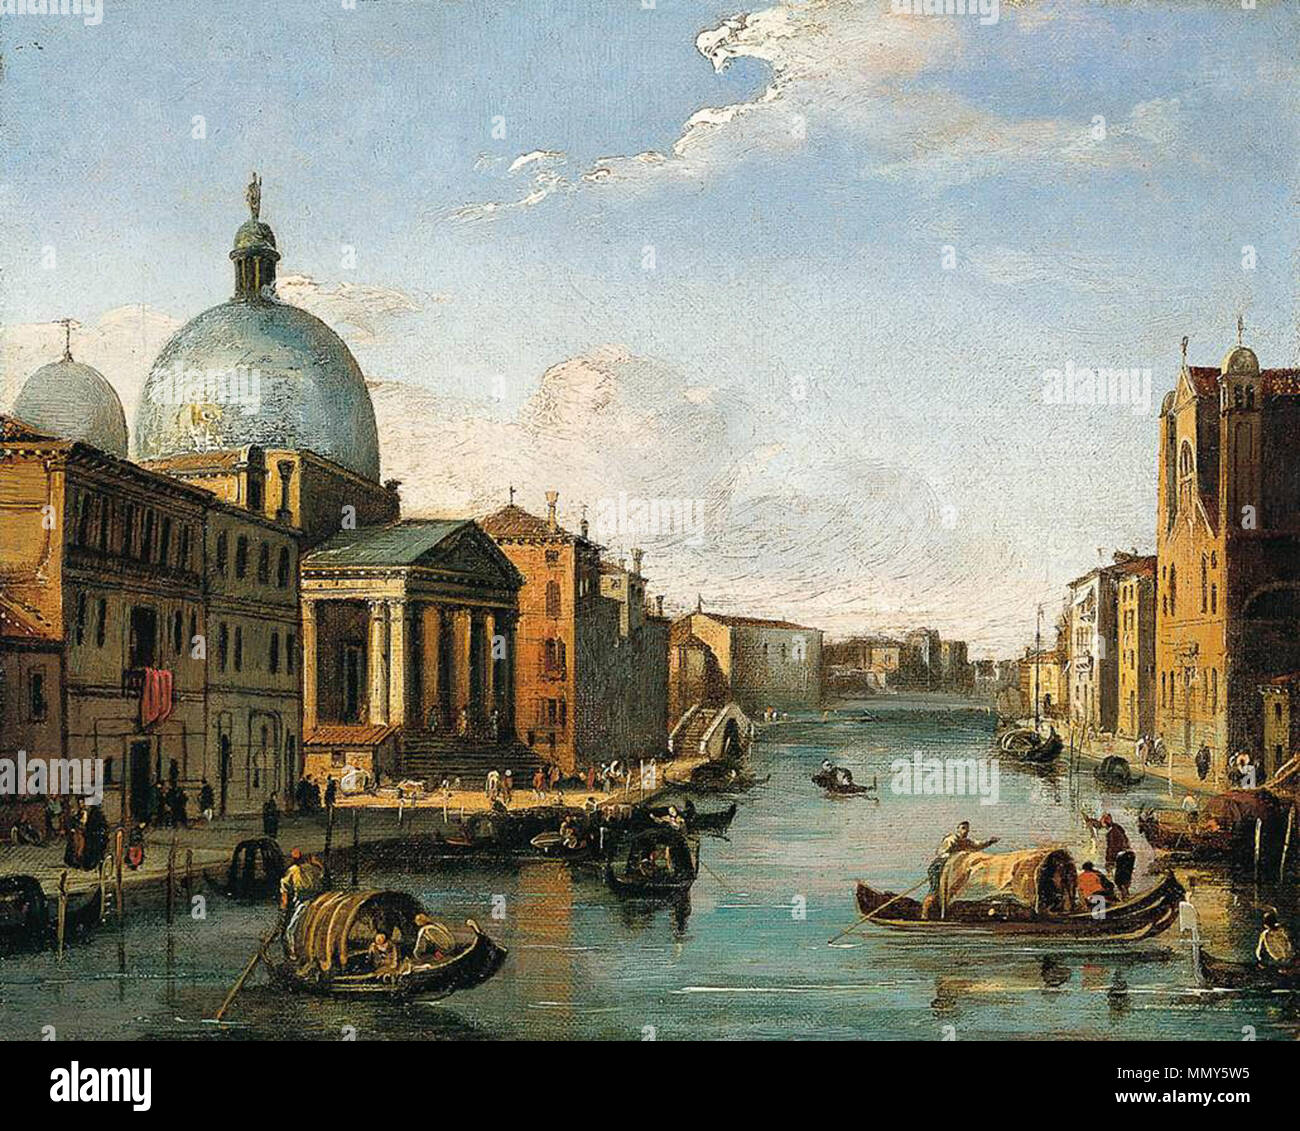 English: Venetian View . first half of 19th century. Giovanni Migliara - Venetian View - WGA15652 Stock Photo